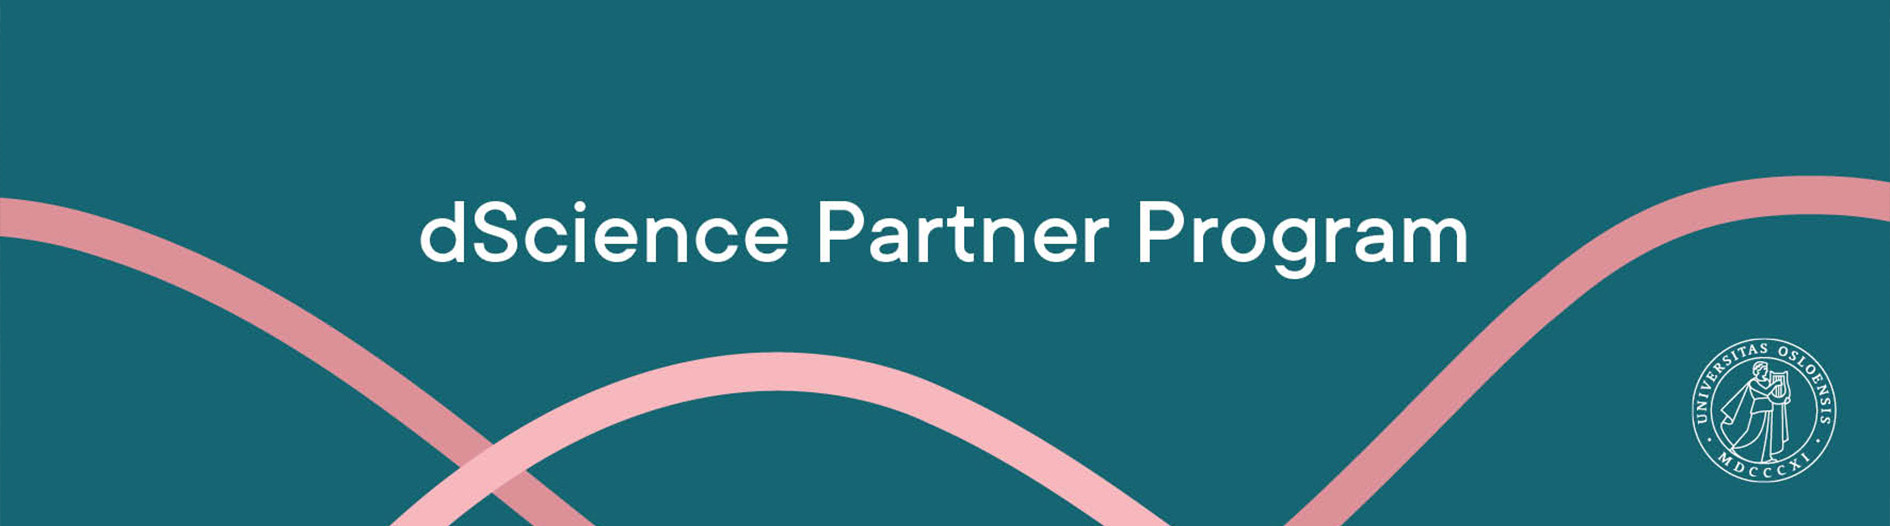 Partnerprogram